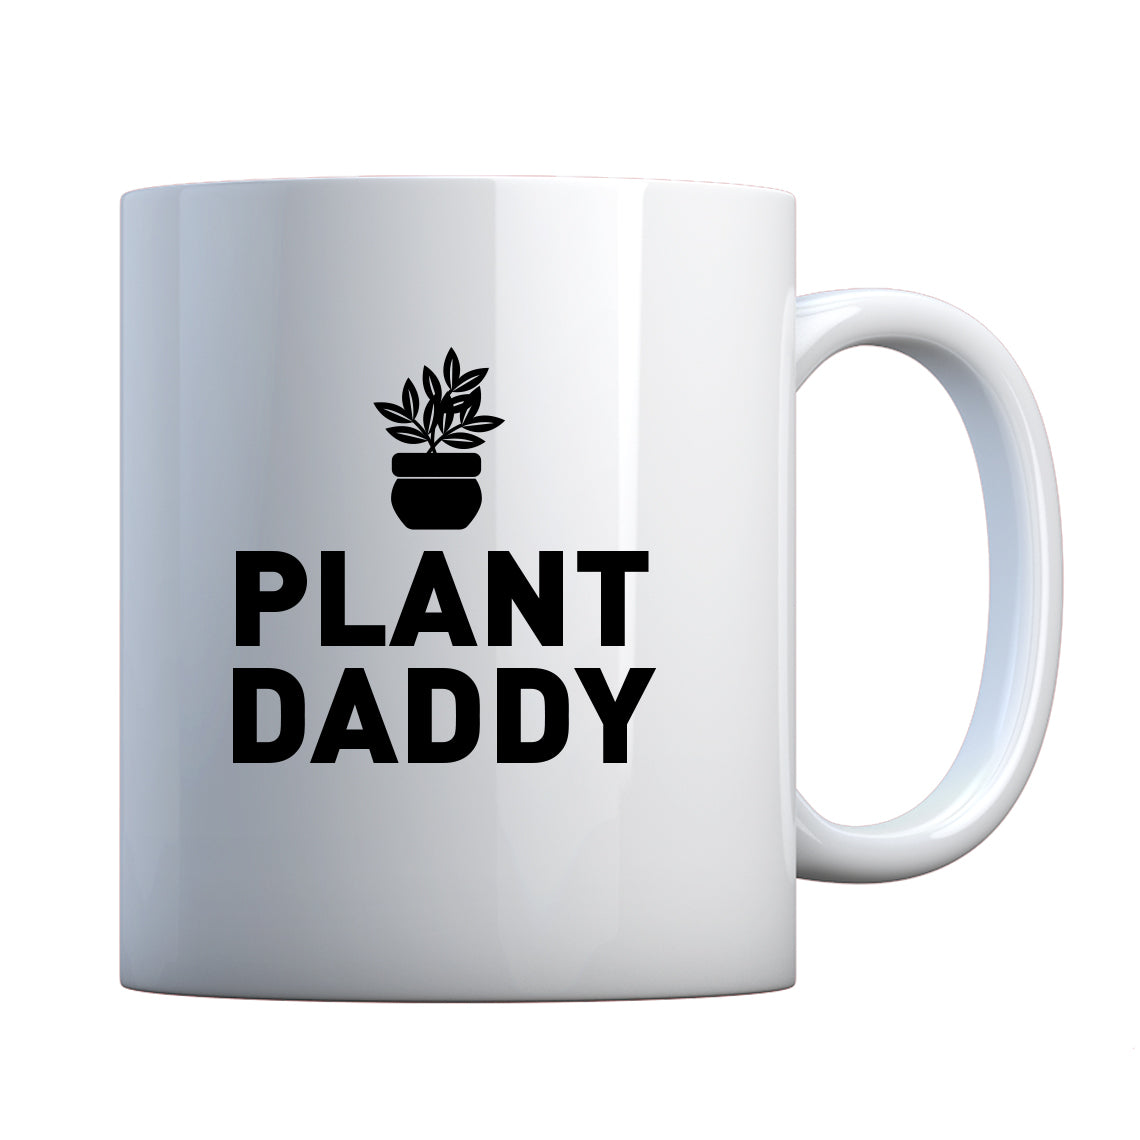 Mug Plant Daddy Ceramic Gift Mug